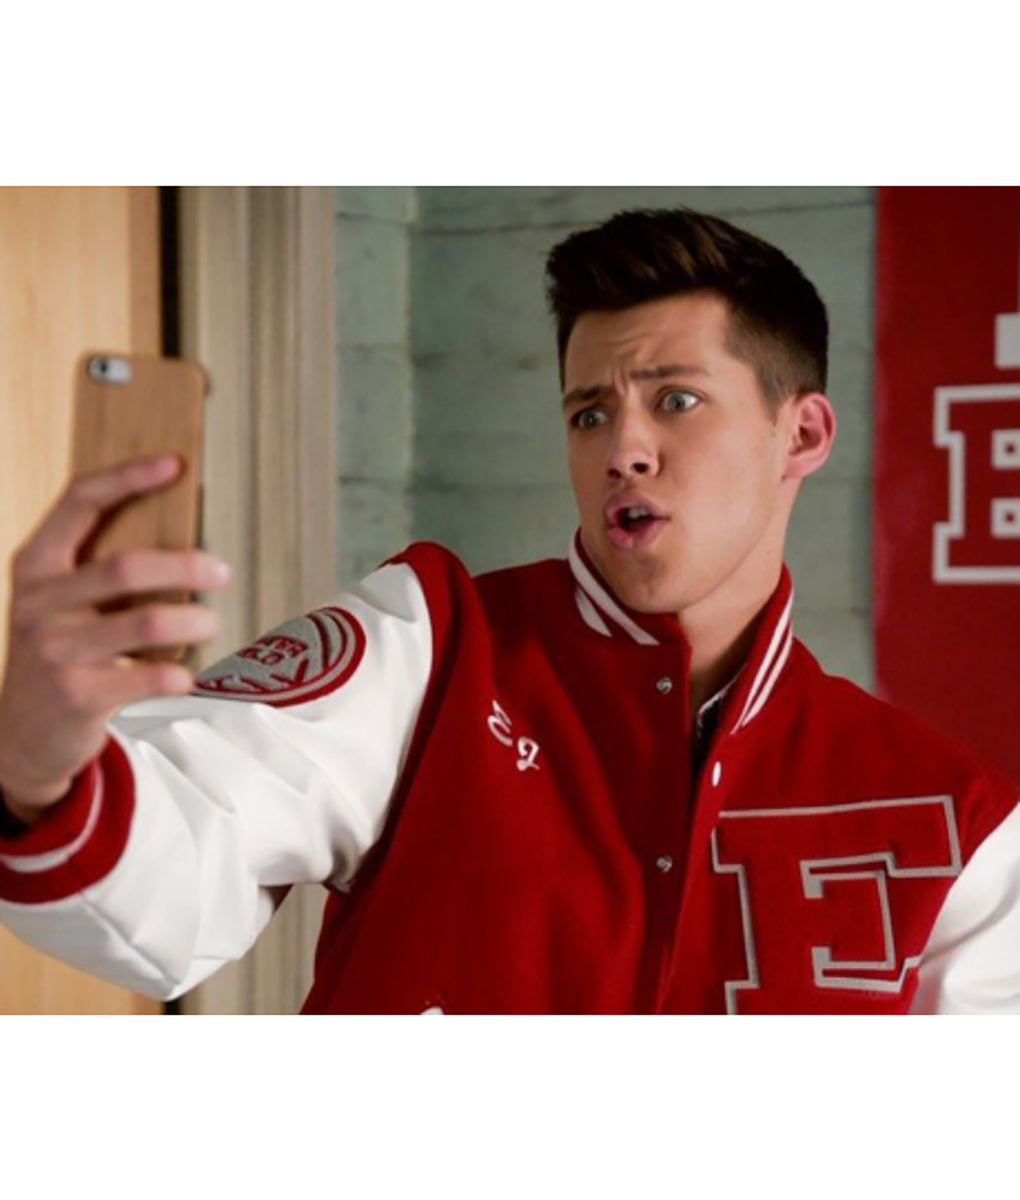 High School Musical Matt Cornett Red and White Varsity Jacket